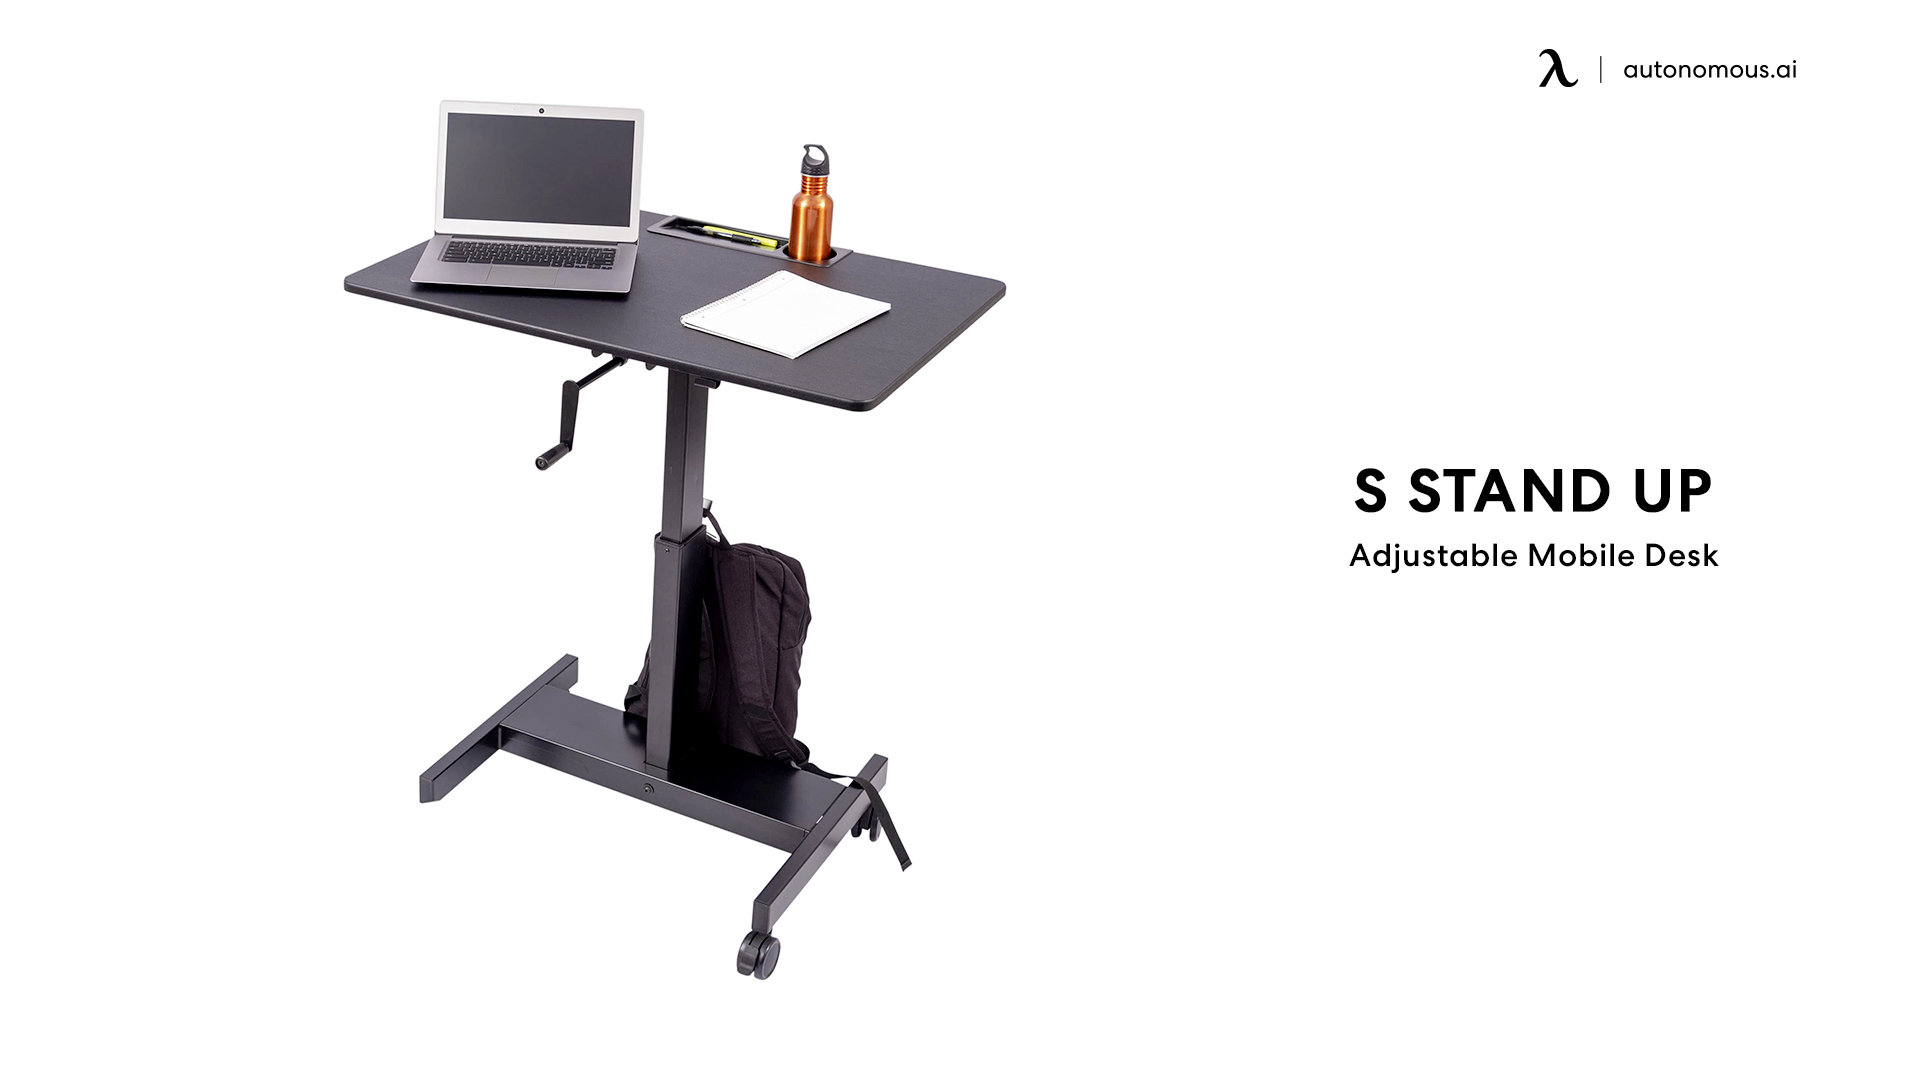 S STAND UP DESK STORE Crank Adjustable Height Single Column Rolling Mobile Standing Desk